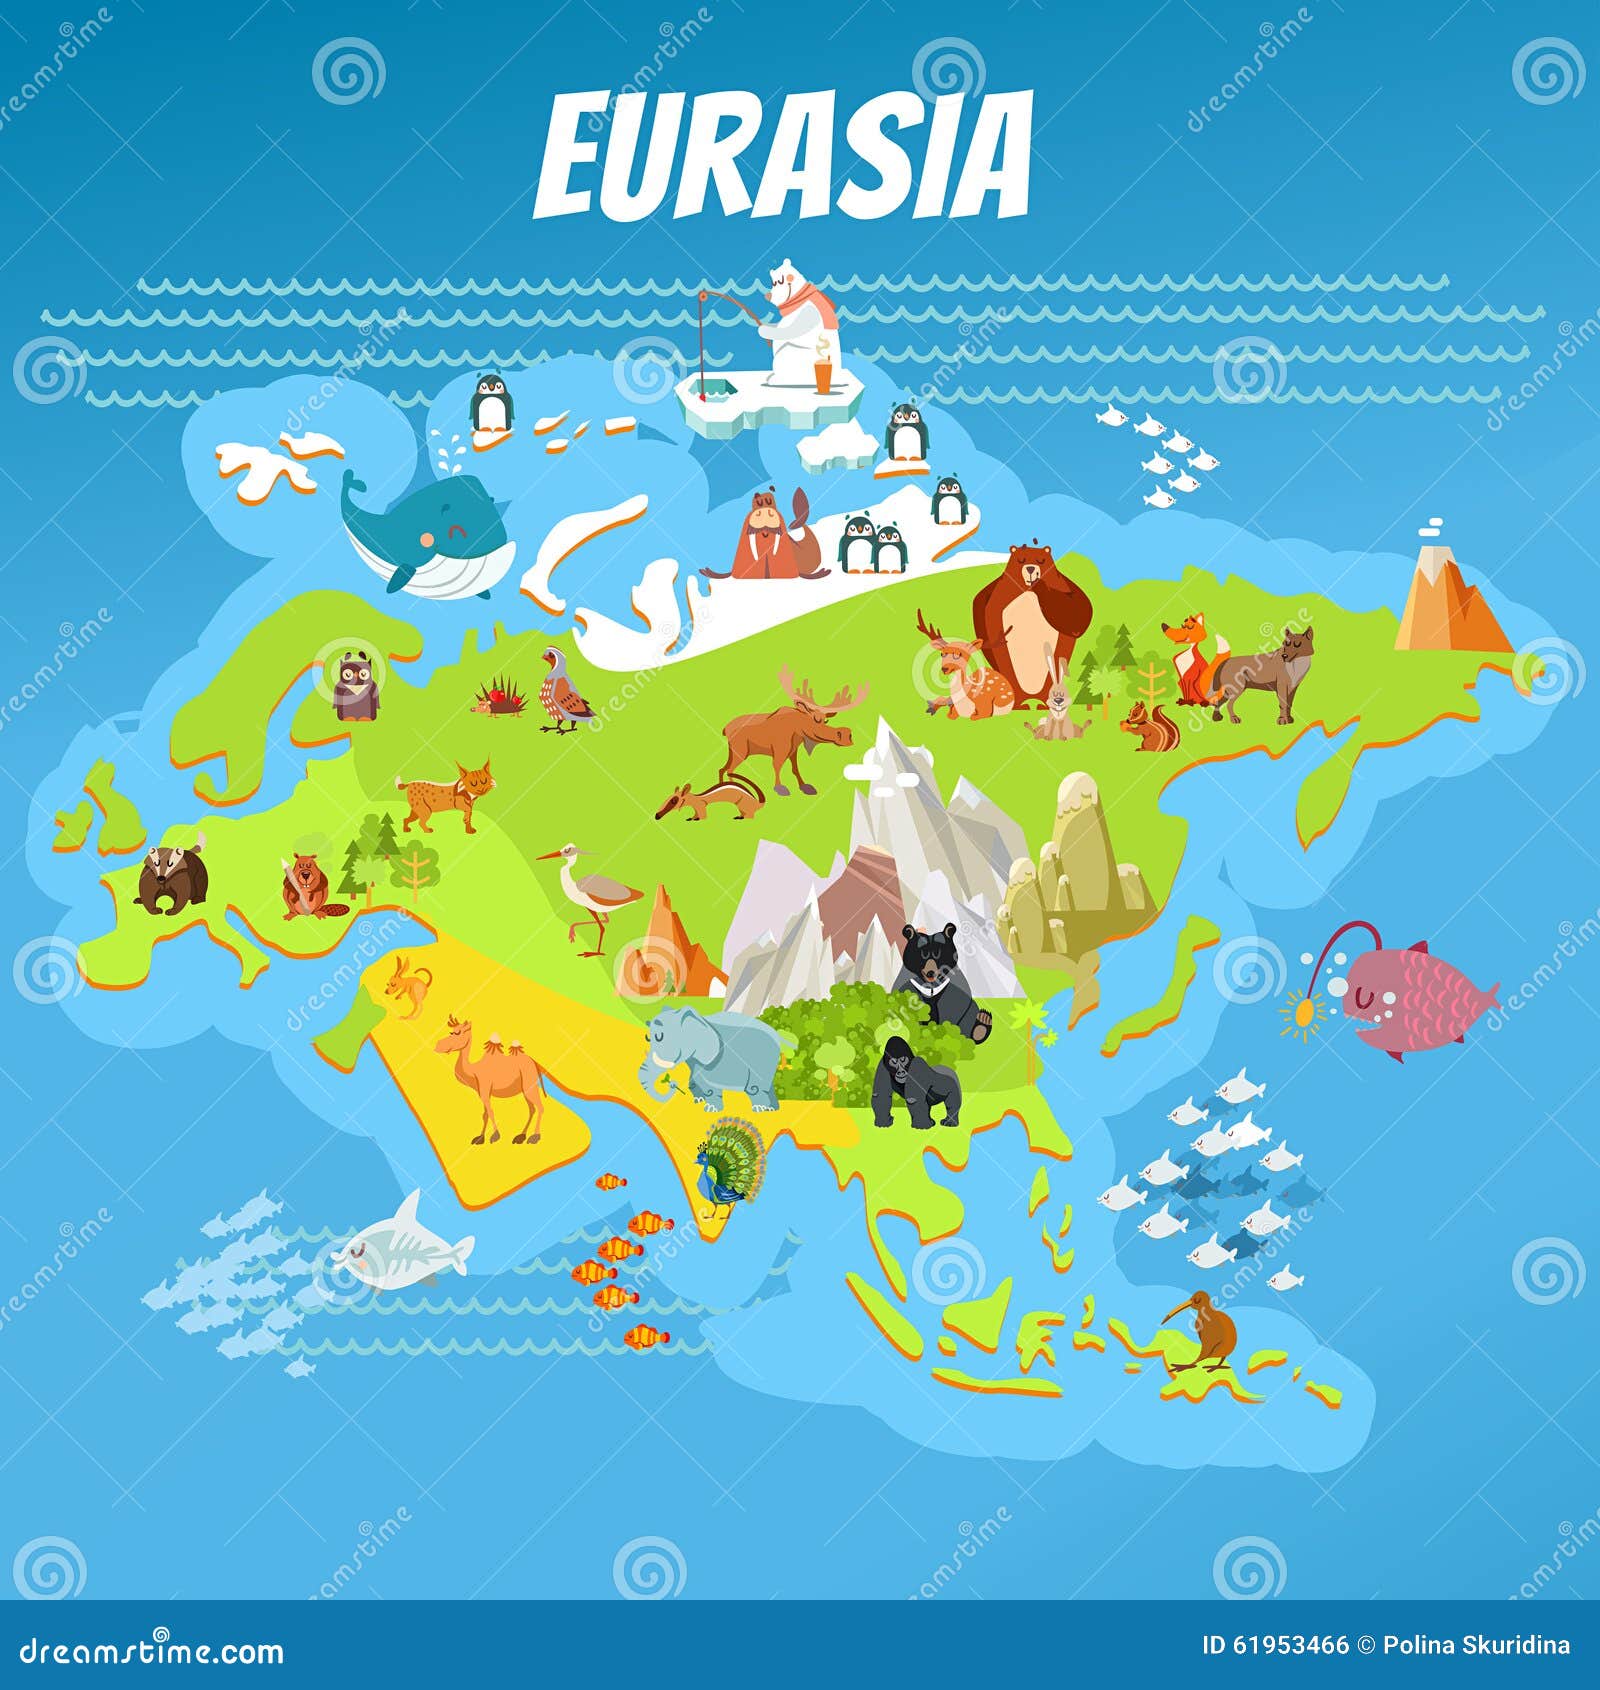 cartoon eurasia continent map with animals